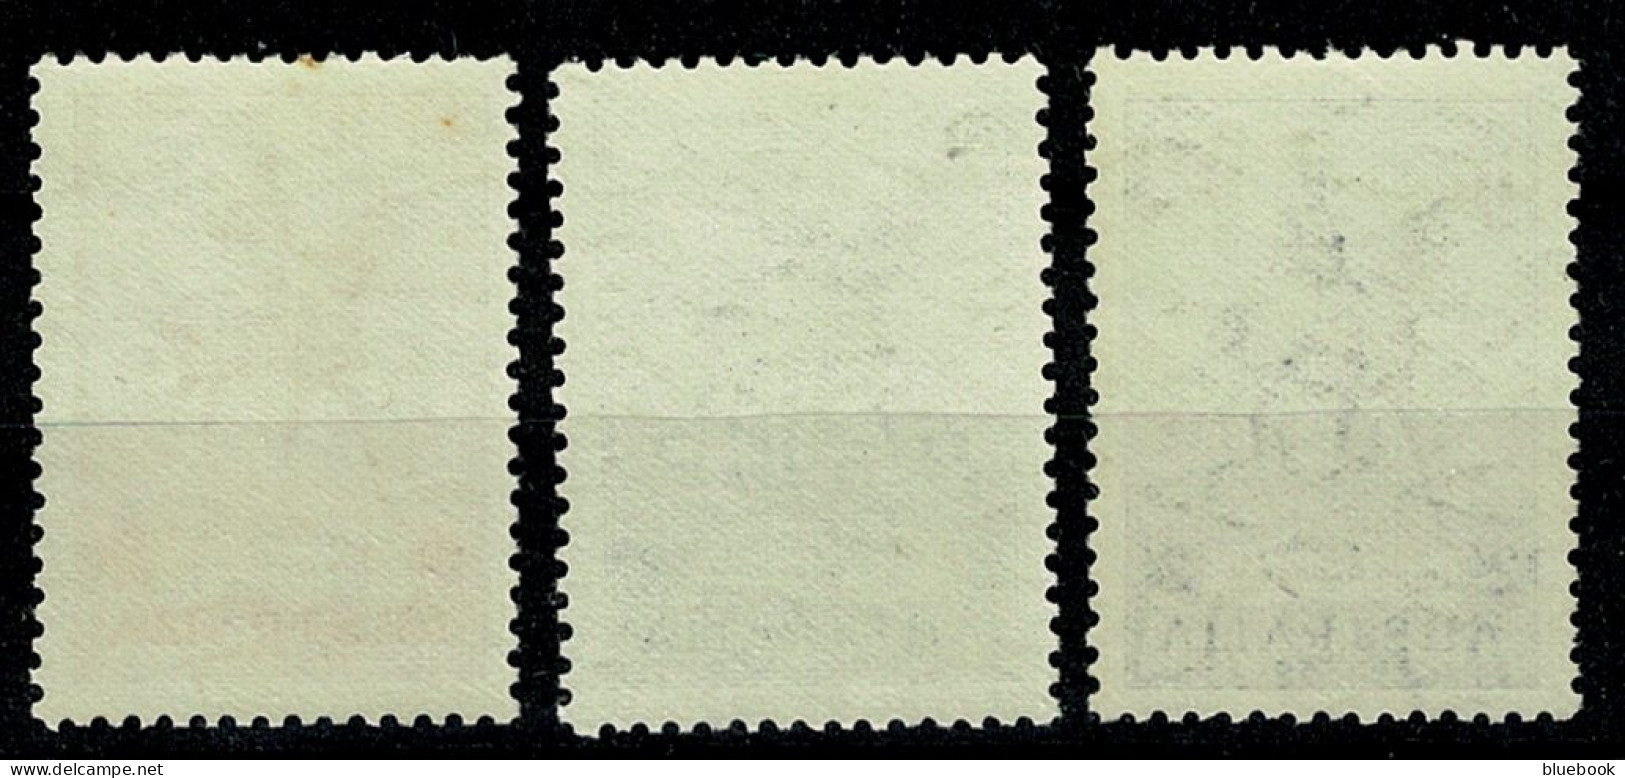 Ref 1649 - Austrailia KGV 1935 Silver Wedding - MNH Set Of Stamps SG 156-158 - Mint Stamps